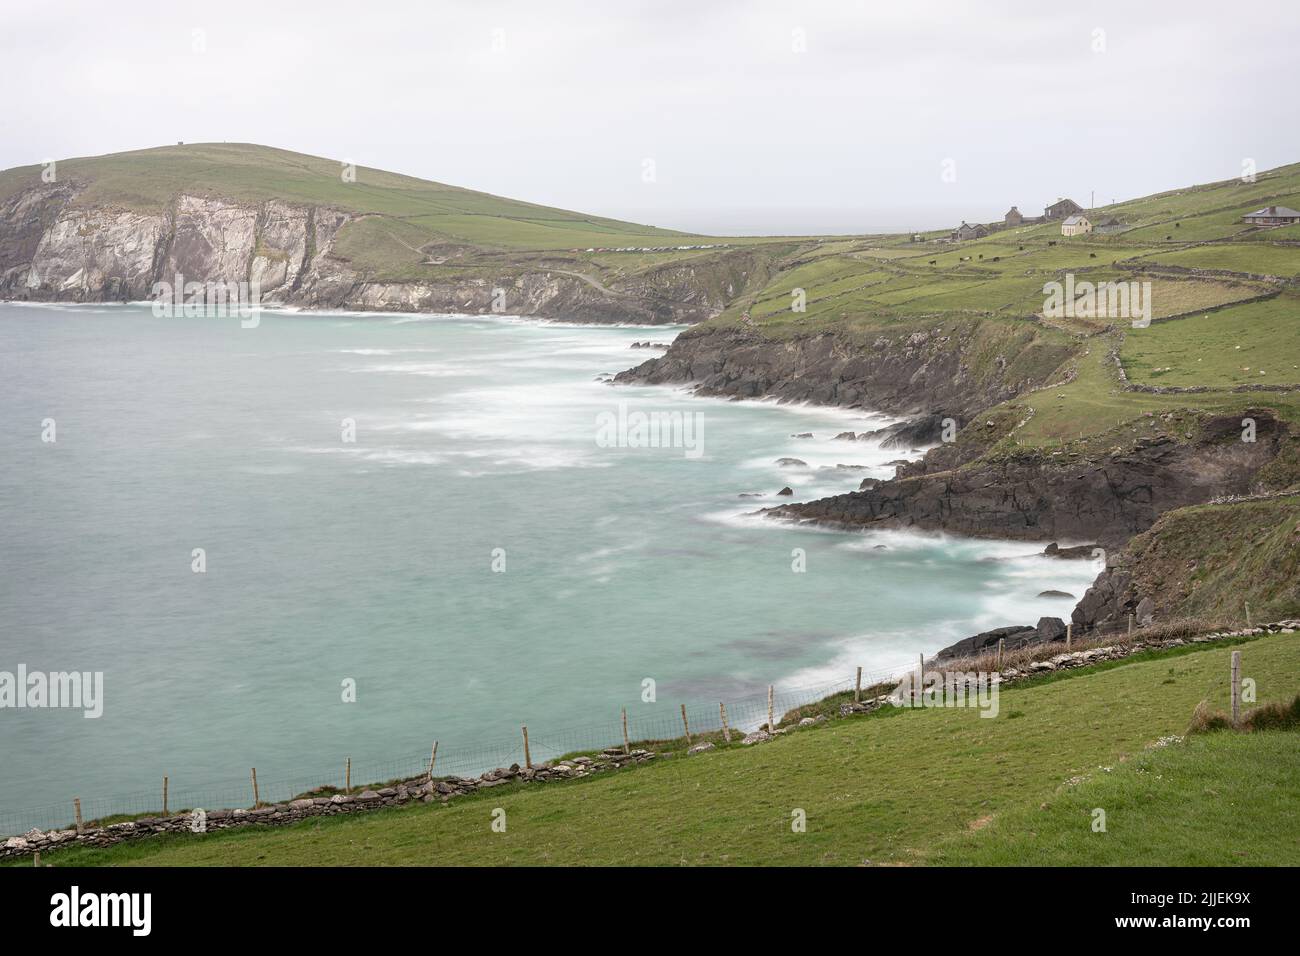 The Atlantic coastline of Kerry on the Dingle peninsular, Ireland Stock Photo